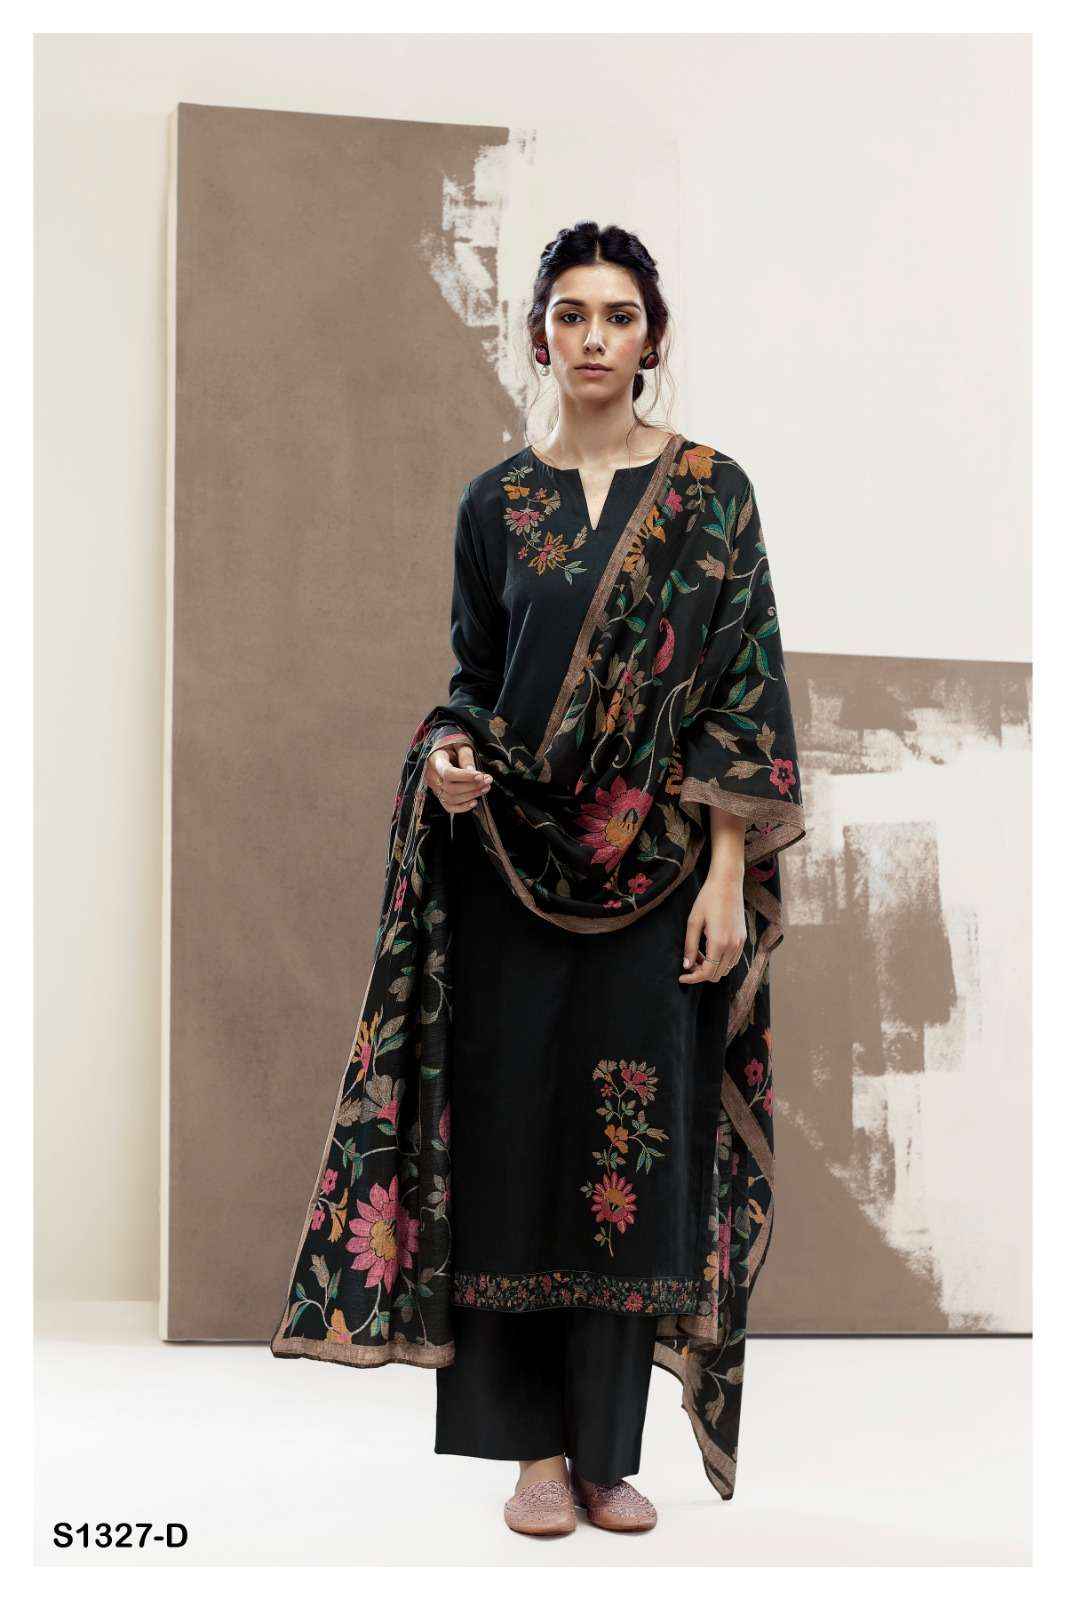 Ganga Ishana 1327 Exclusive Fancy Cotton Ladies Ganga Suit Collection (5 pcs catalog )